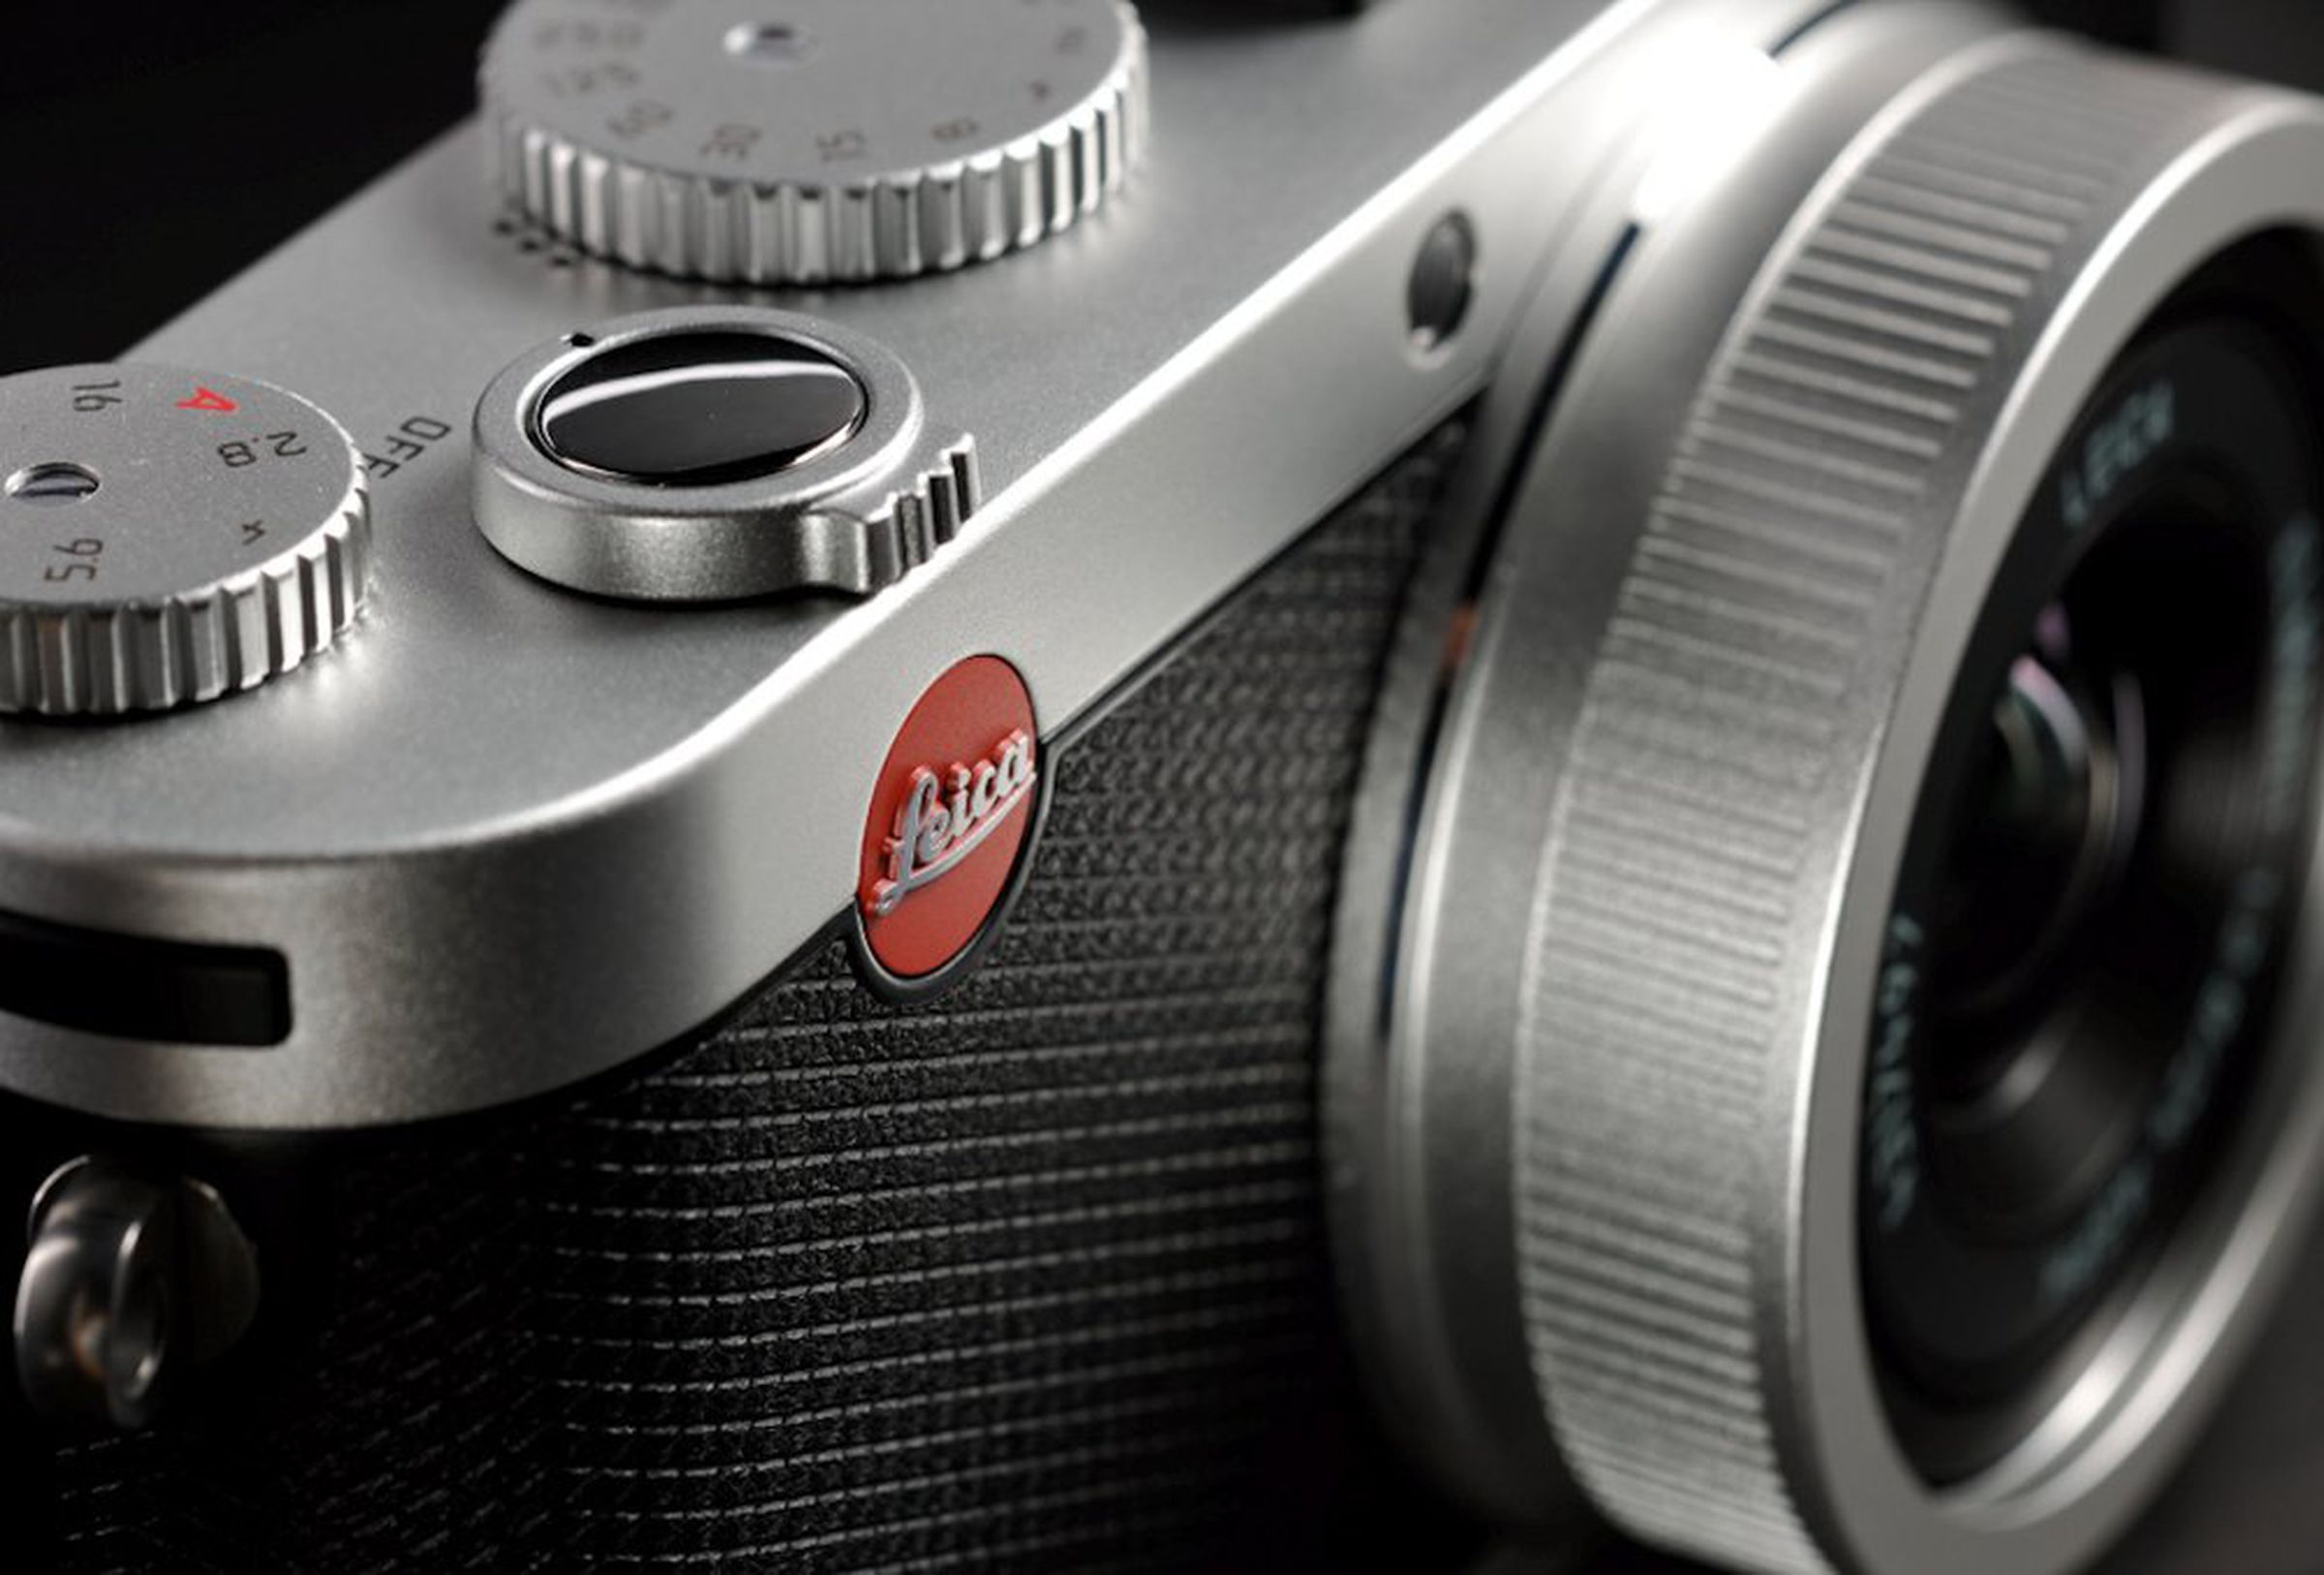 Leica M-Monochrom, X2, V-Lux40, and M9 Hermès special edition